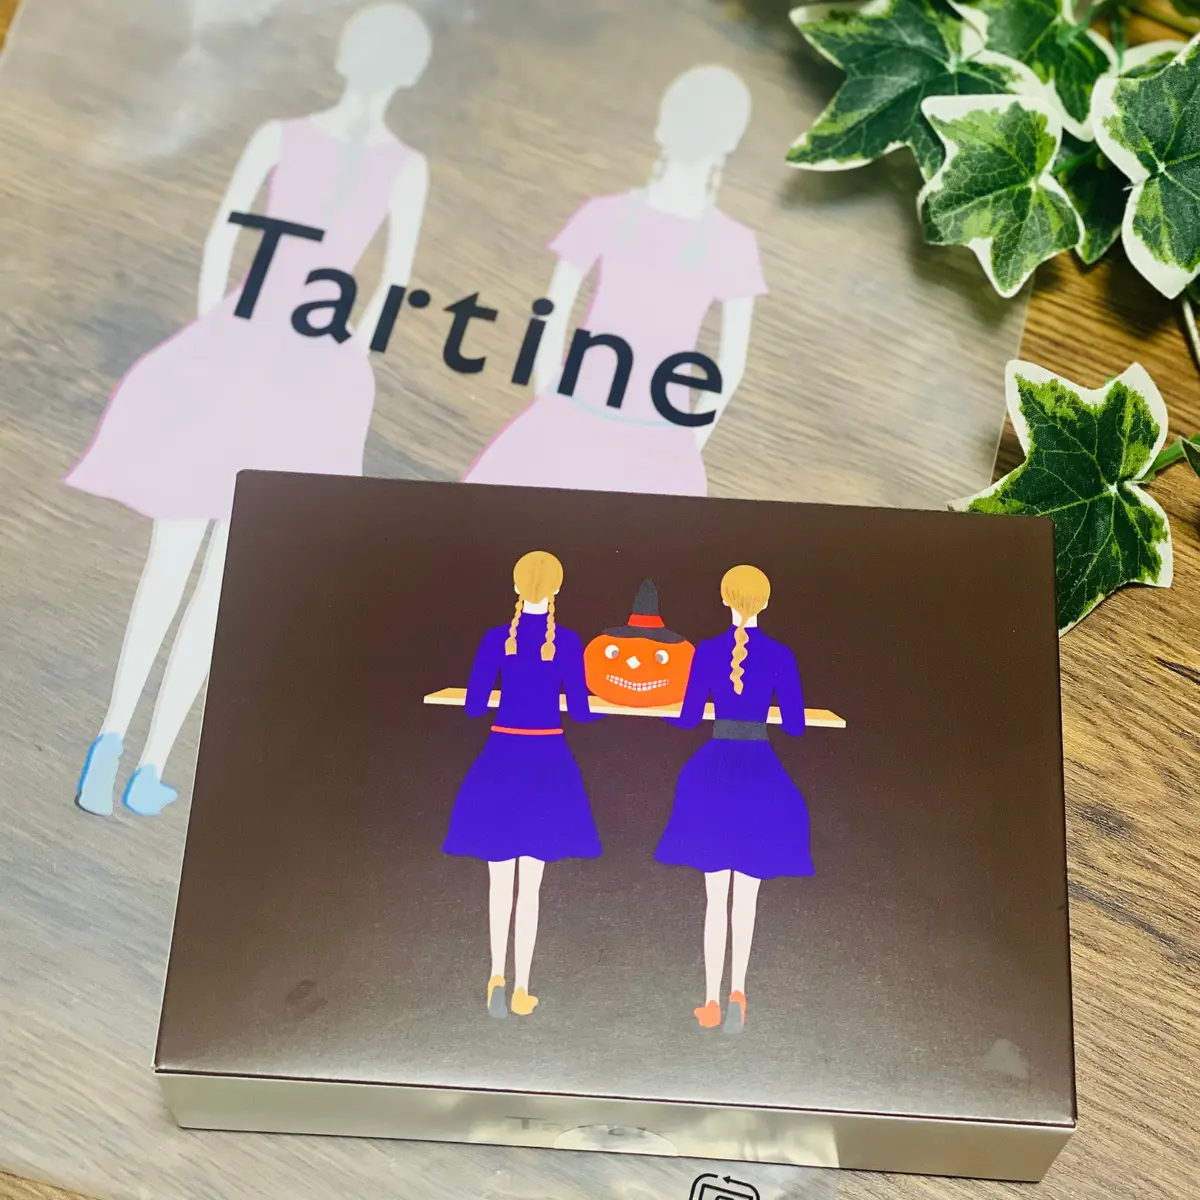 Tartine(タルティン)